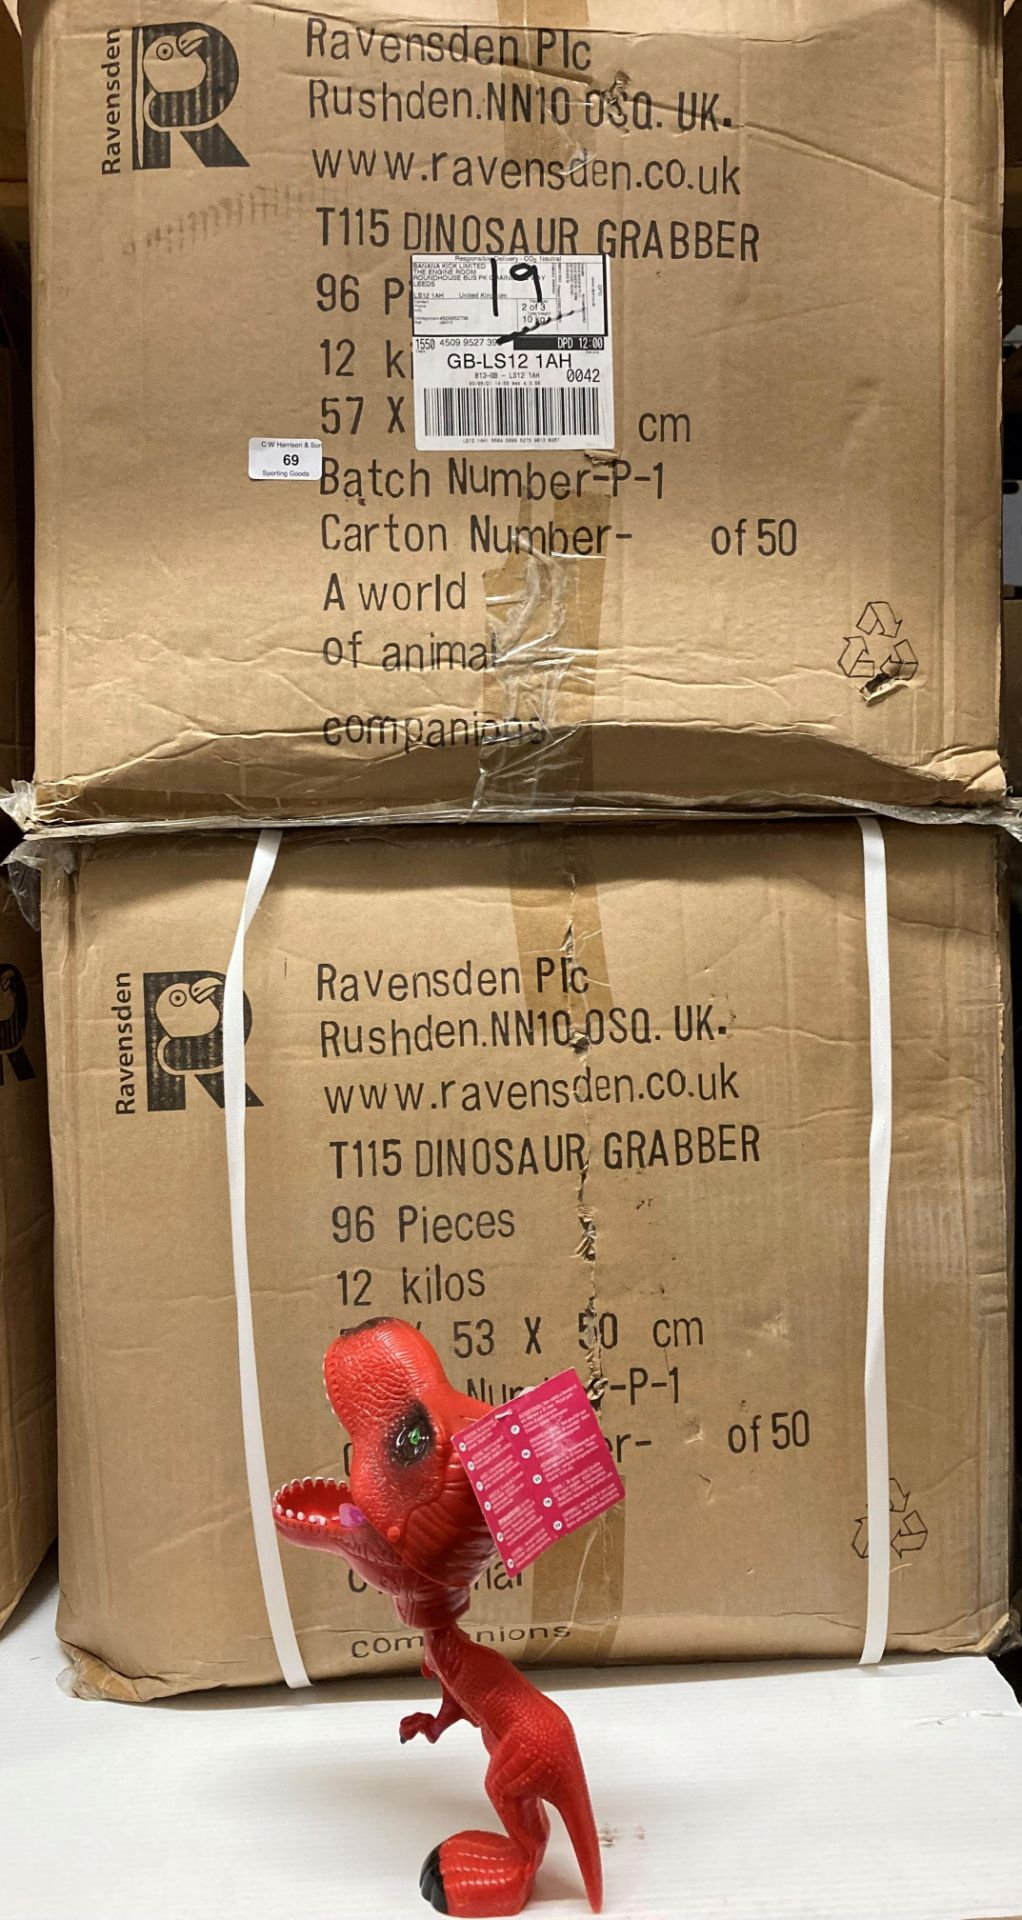 192 x Ravensden plastic dinosaur grabbers (2 boxes) Further Information *** Please - Image 2 of 2